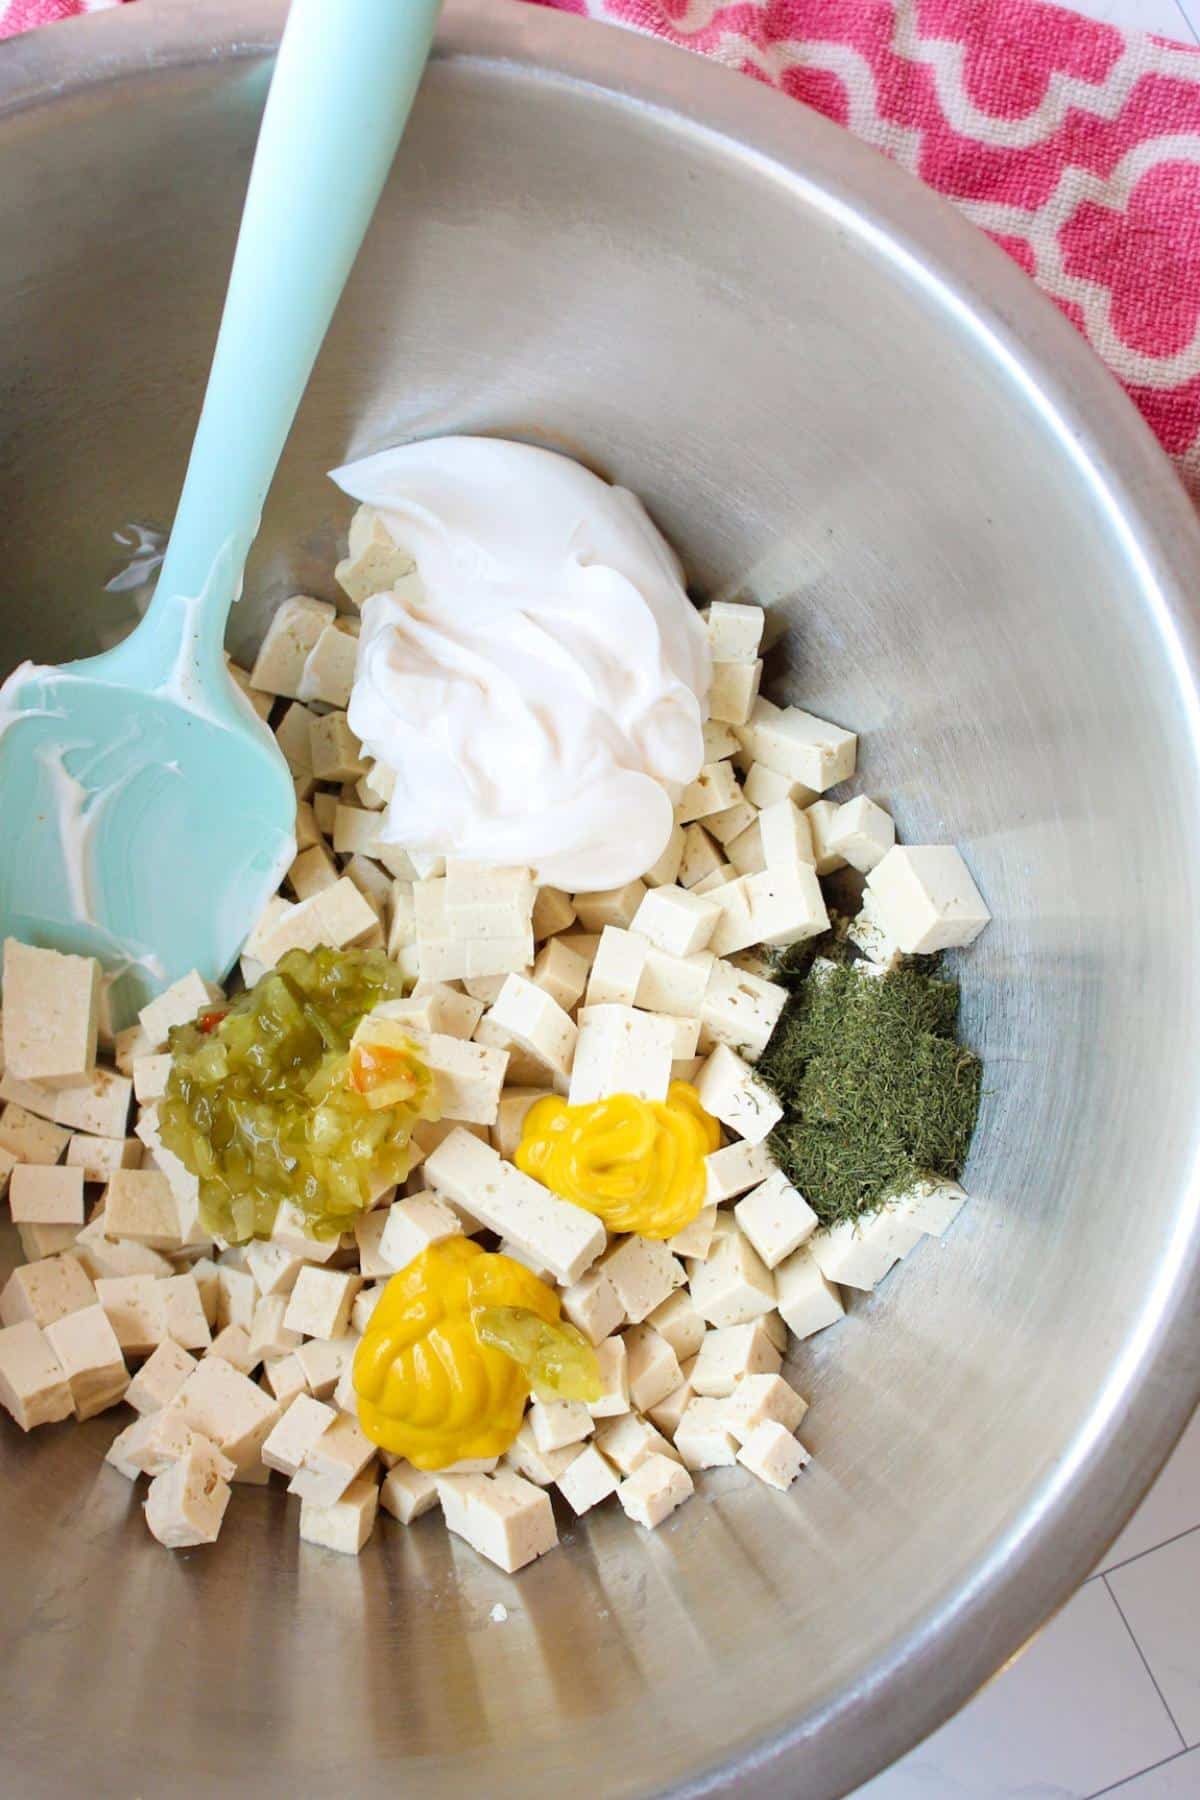 Tofu egg salad ingredients in a large mixing bowl.